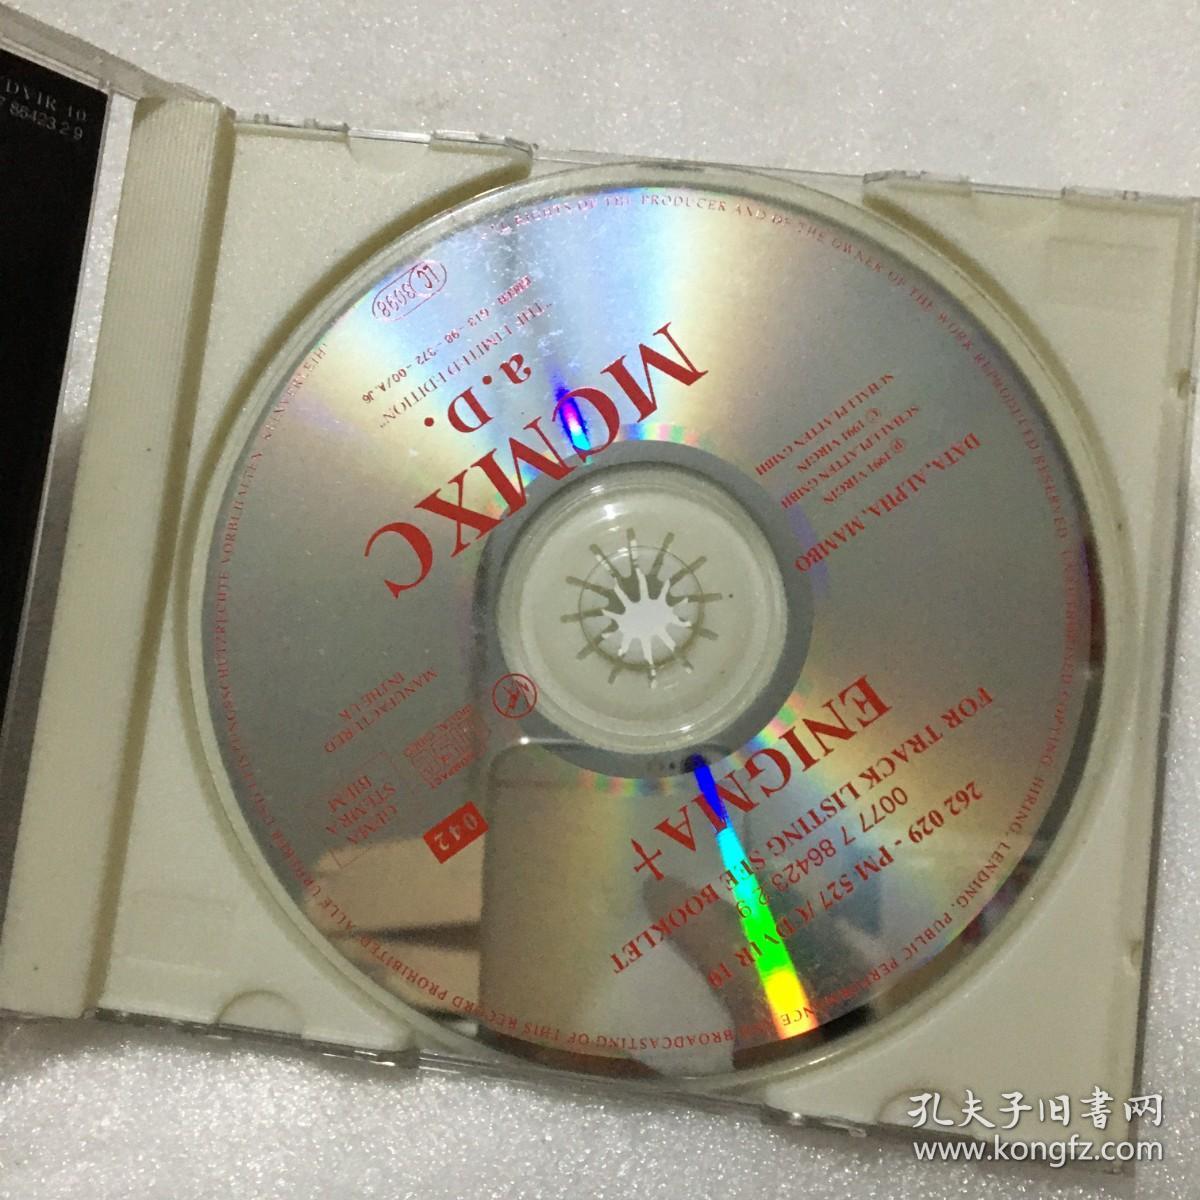 CD 光盘 ENIGMA MCMXC 英格玛之一 迷